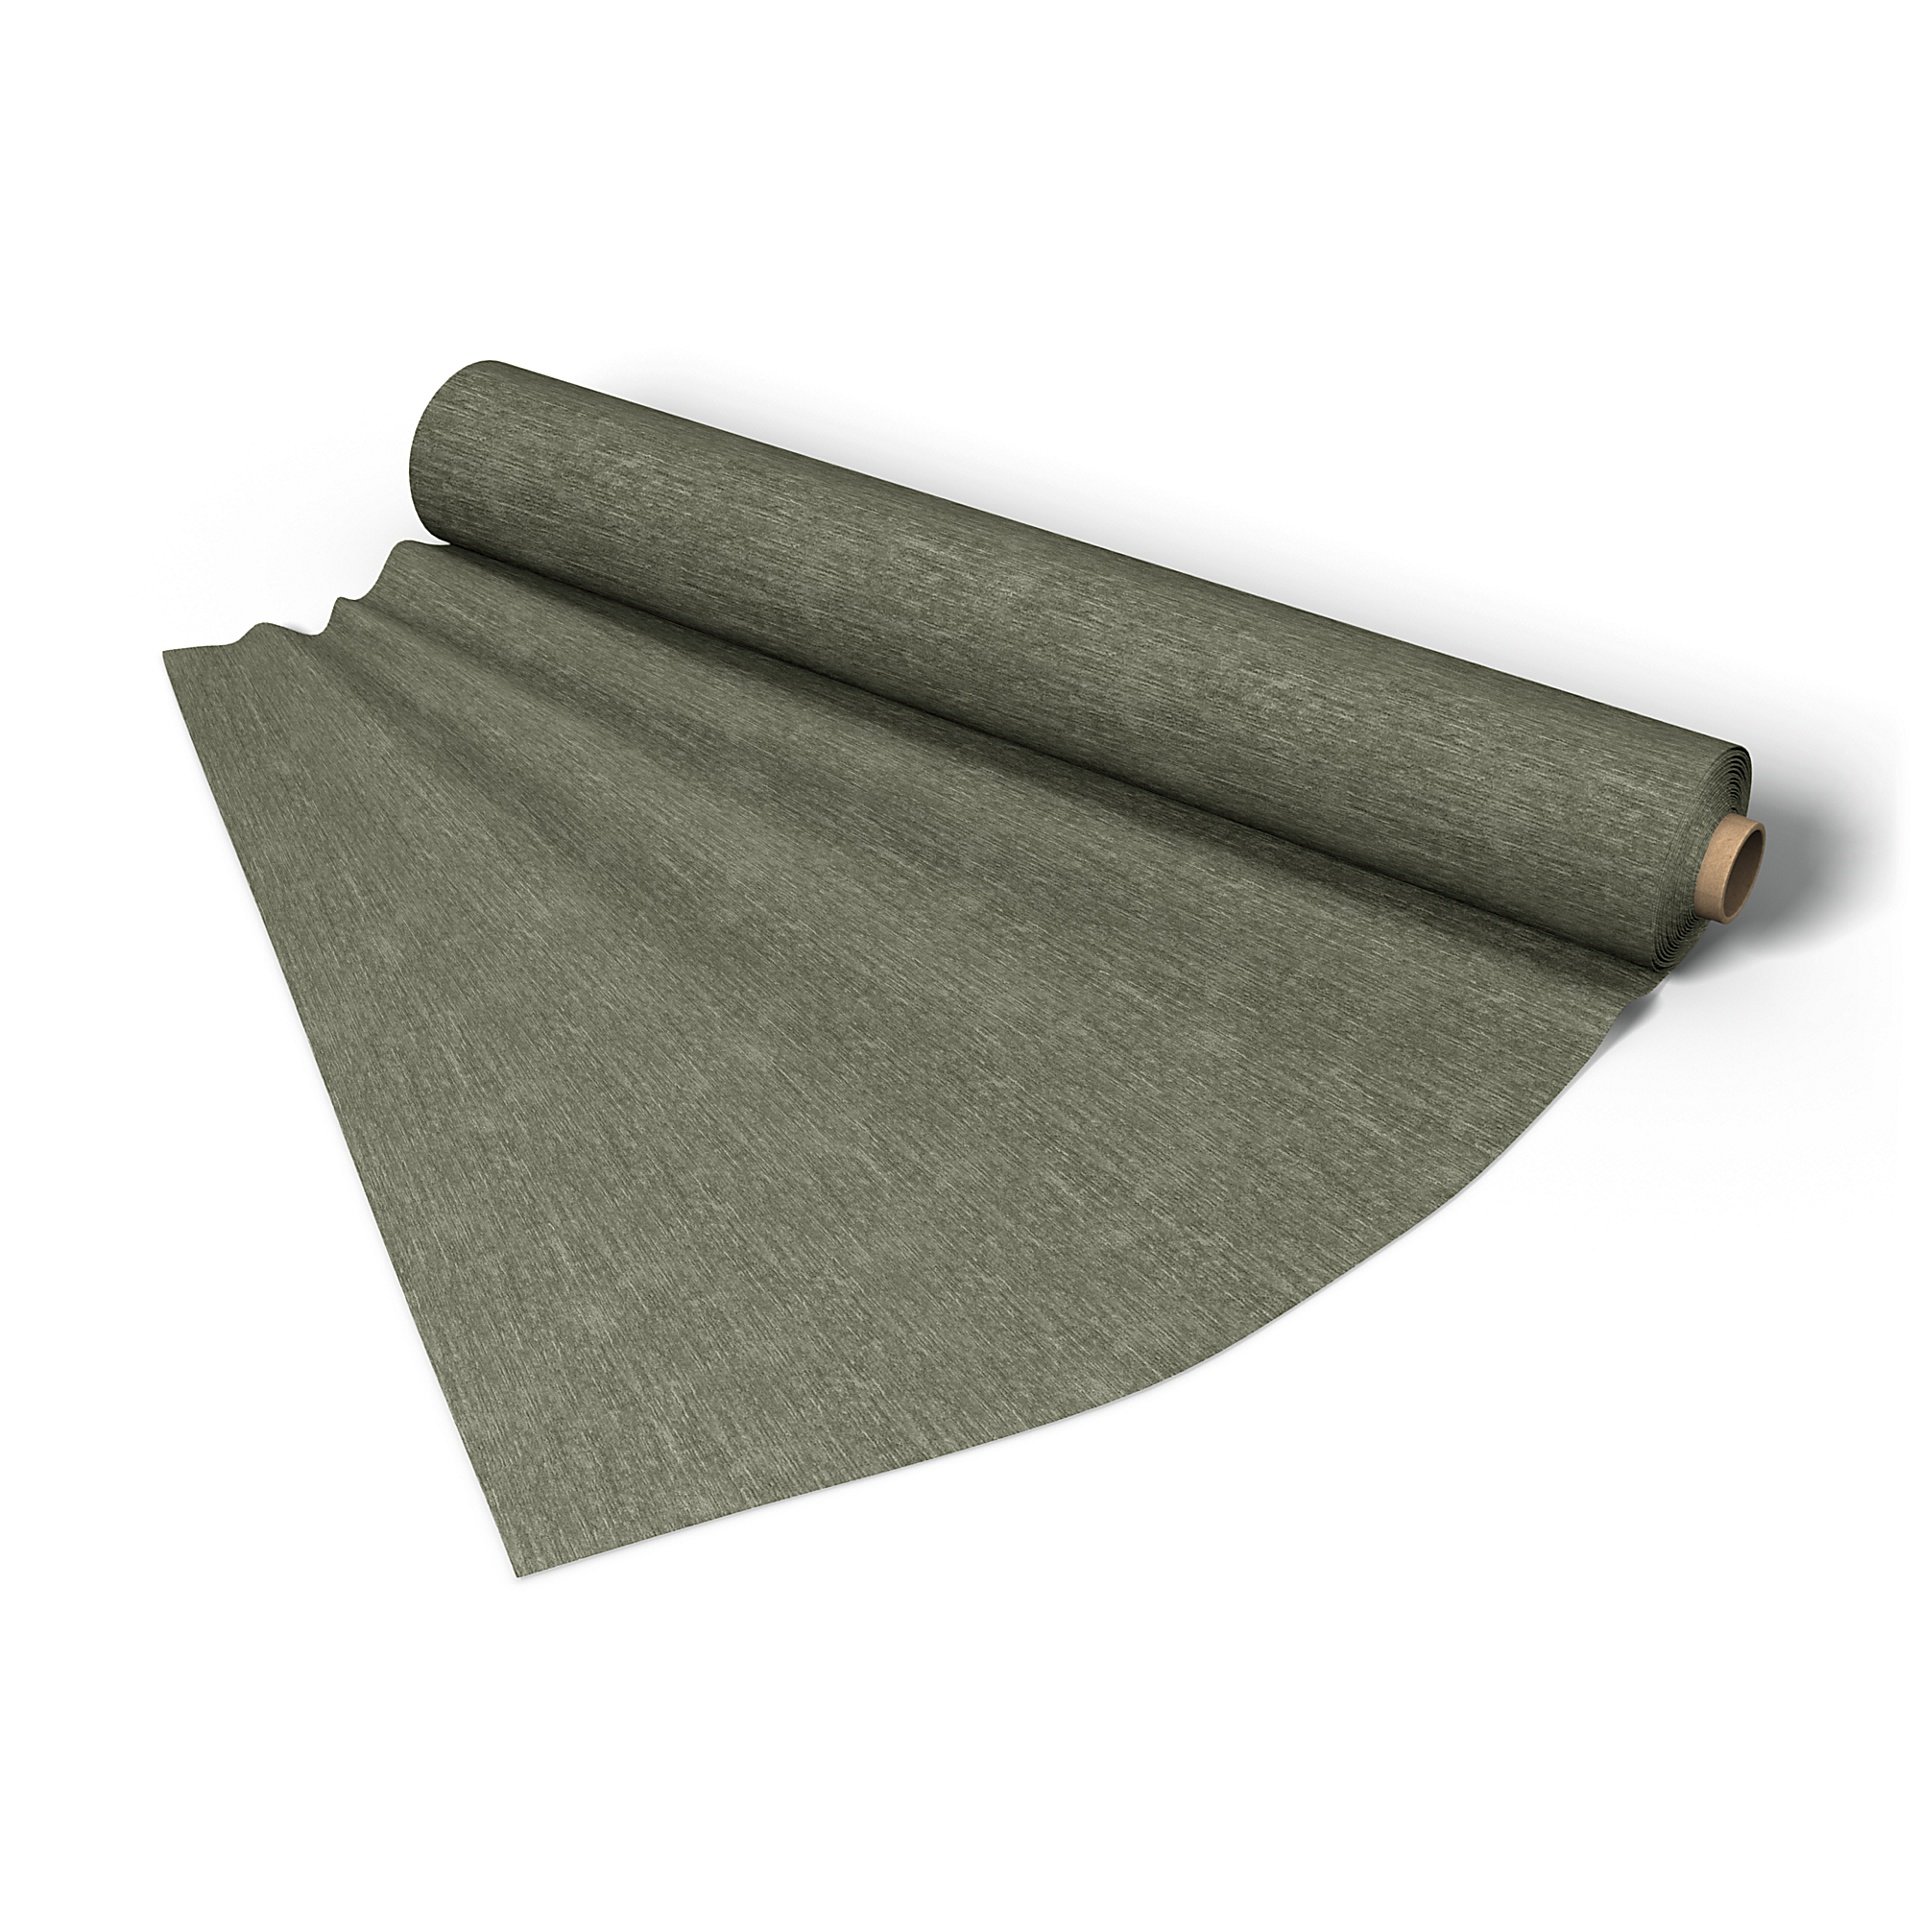 Fabric per metre, Green Grey, Velvet - Bemz